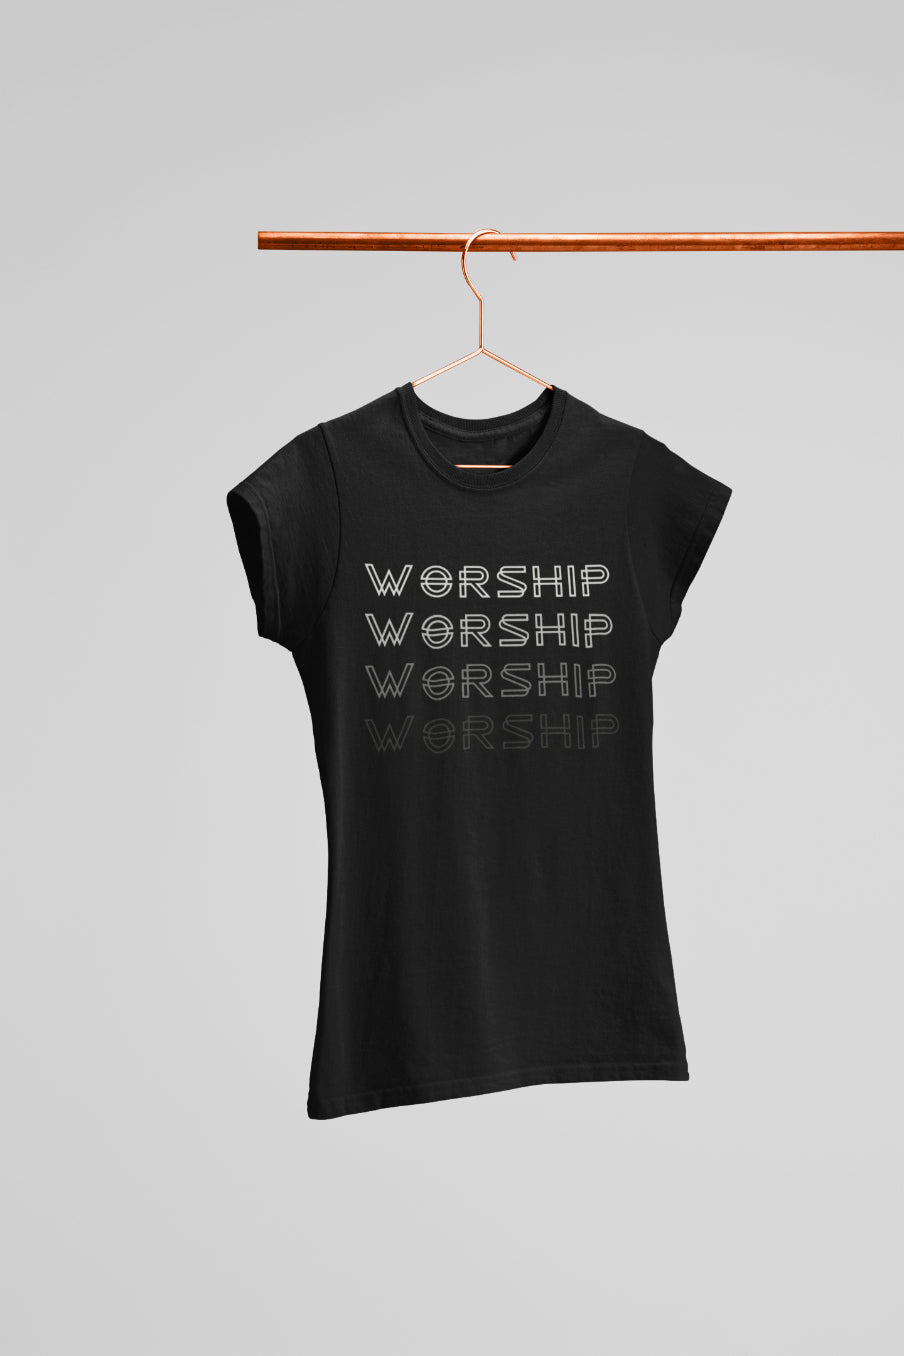 Camiseta Worship 3 Feminina